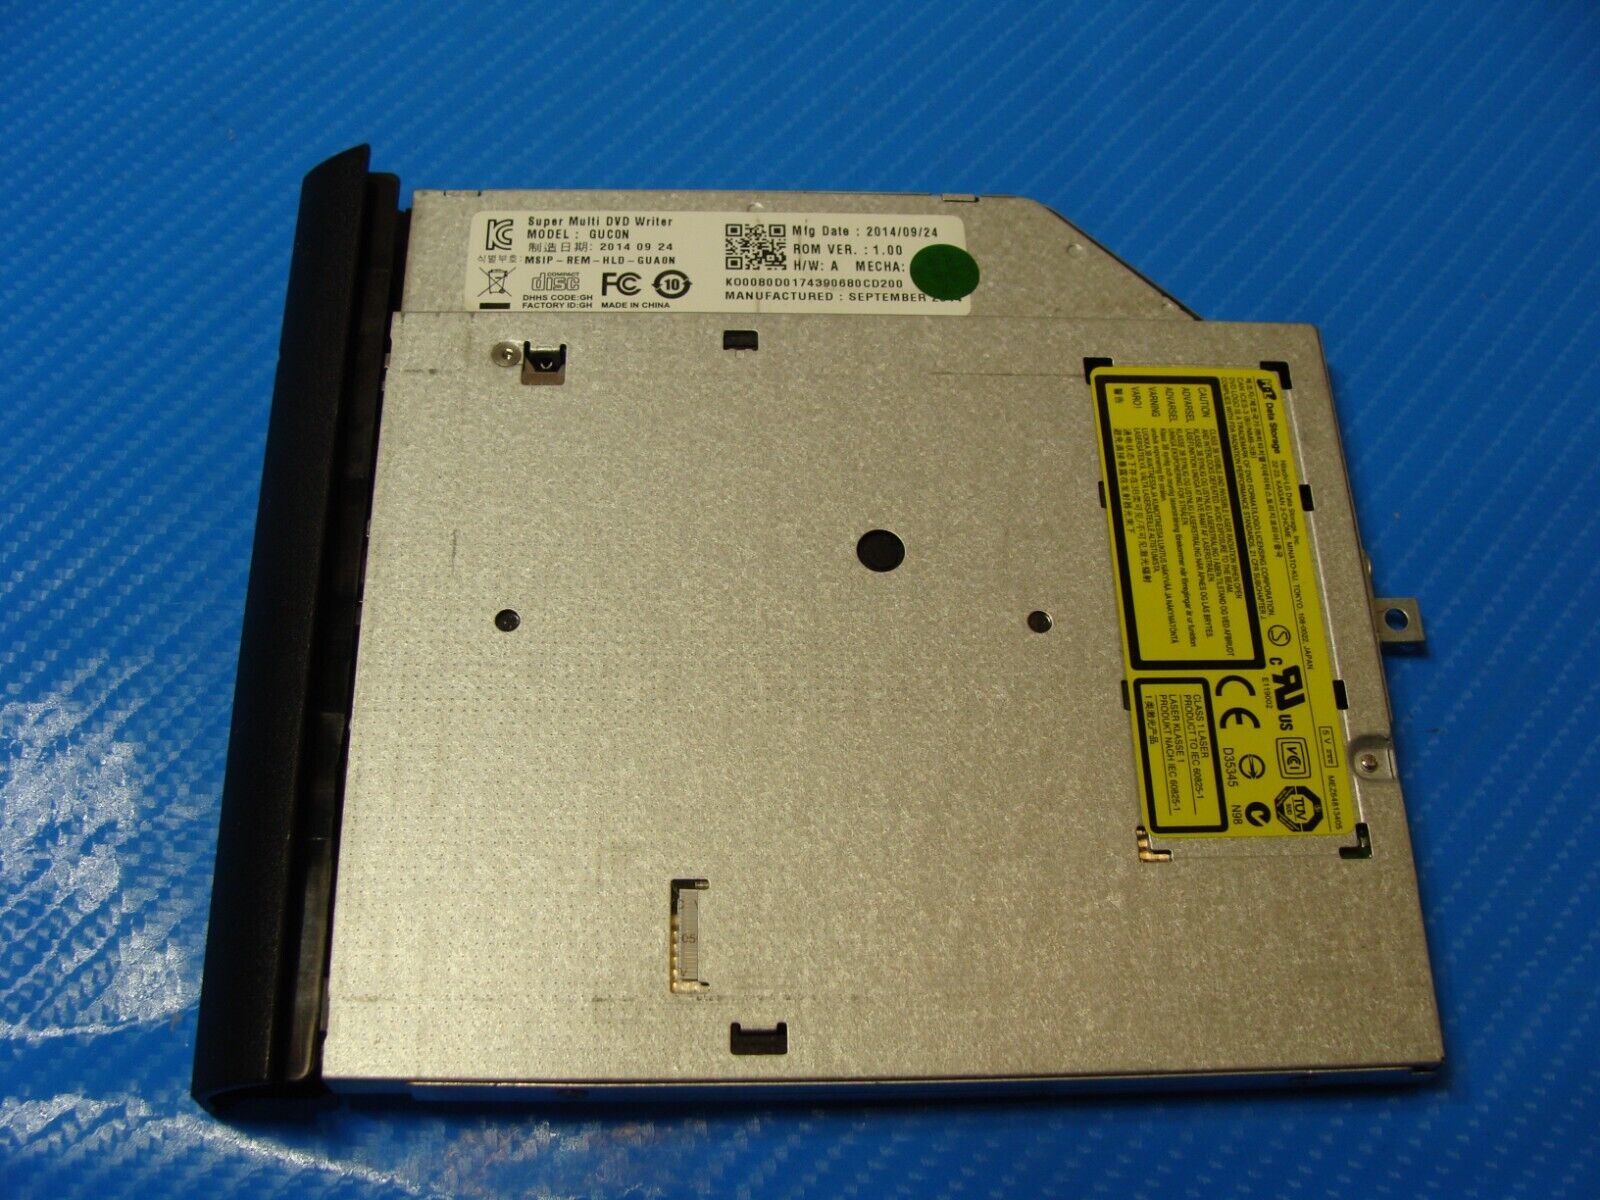 Acer Aspire 15.6” E5 572G-31CL Genuine Laptop Super Multi DVD Writer GUC0N